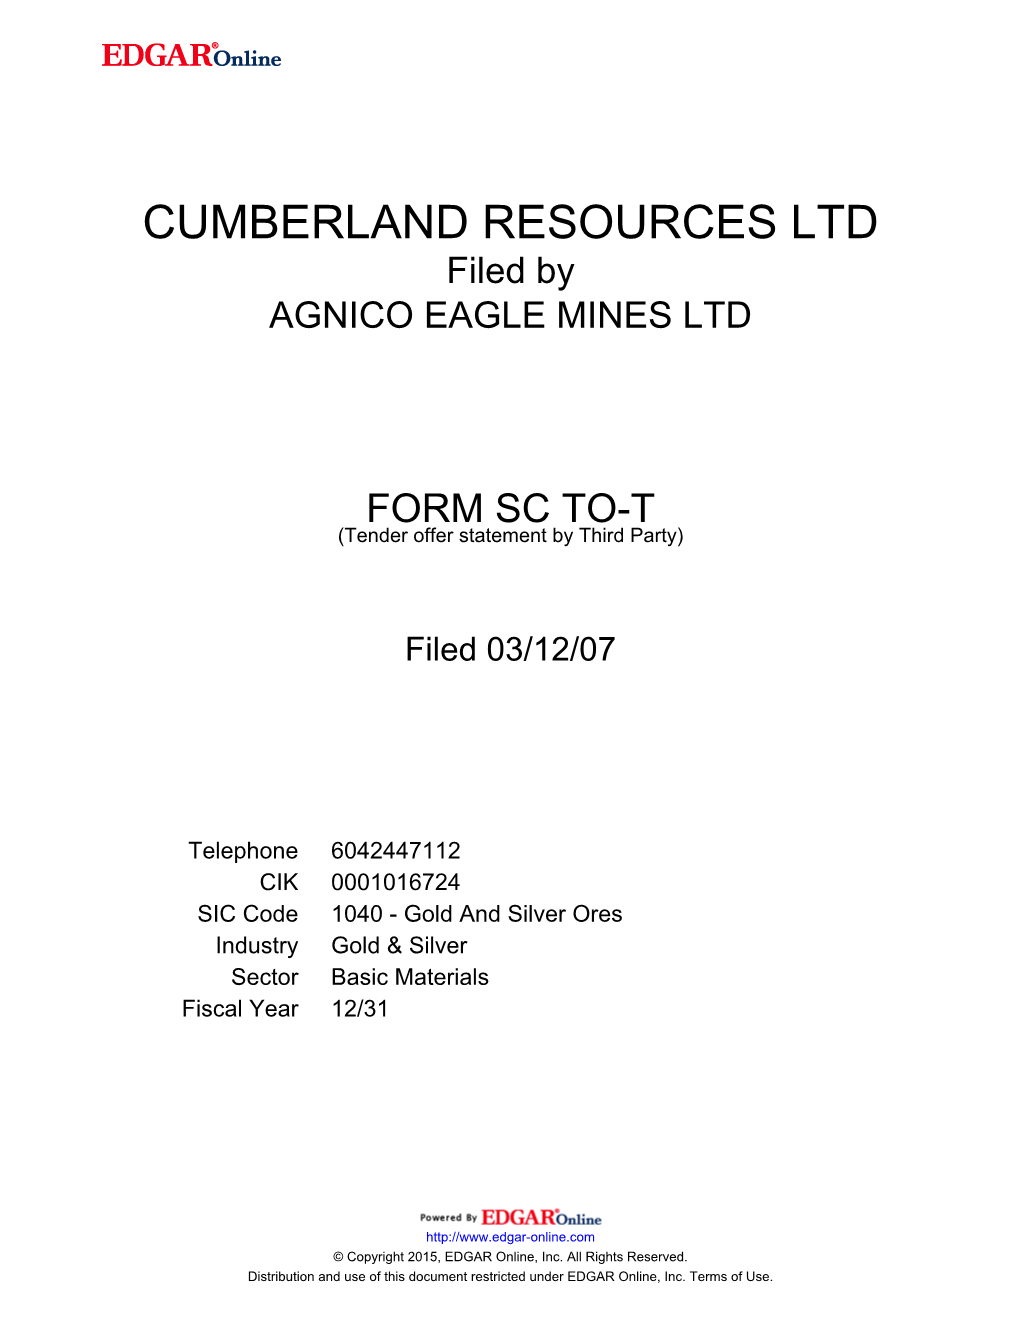 CUMBERLAND RESOURCES LTD Filed by AGNICO EAGLE MINES LTD